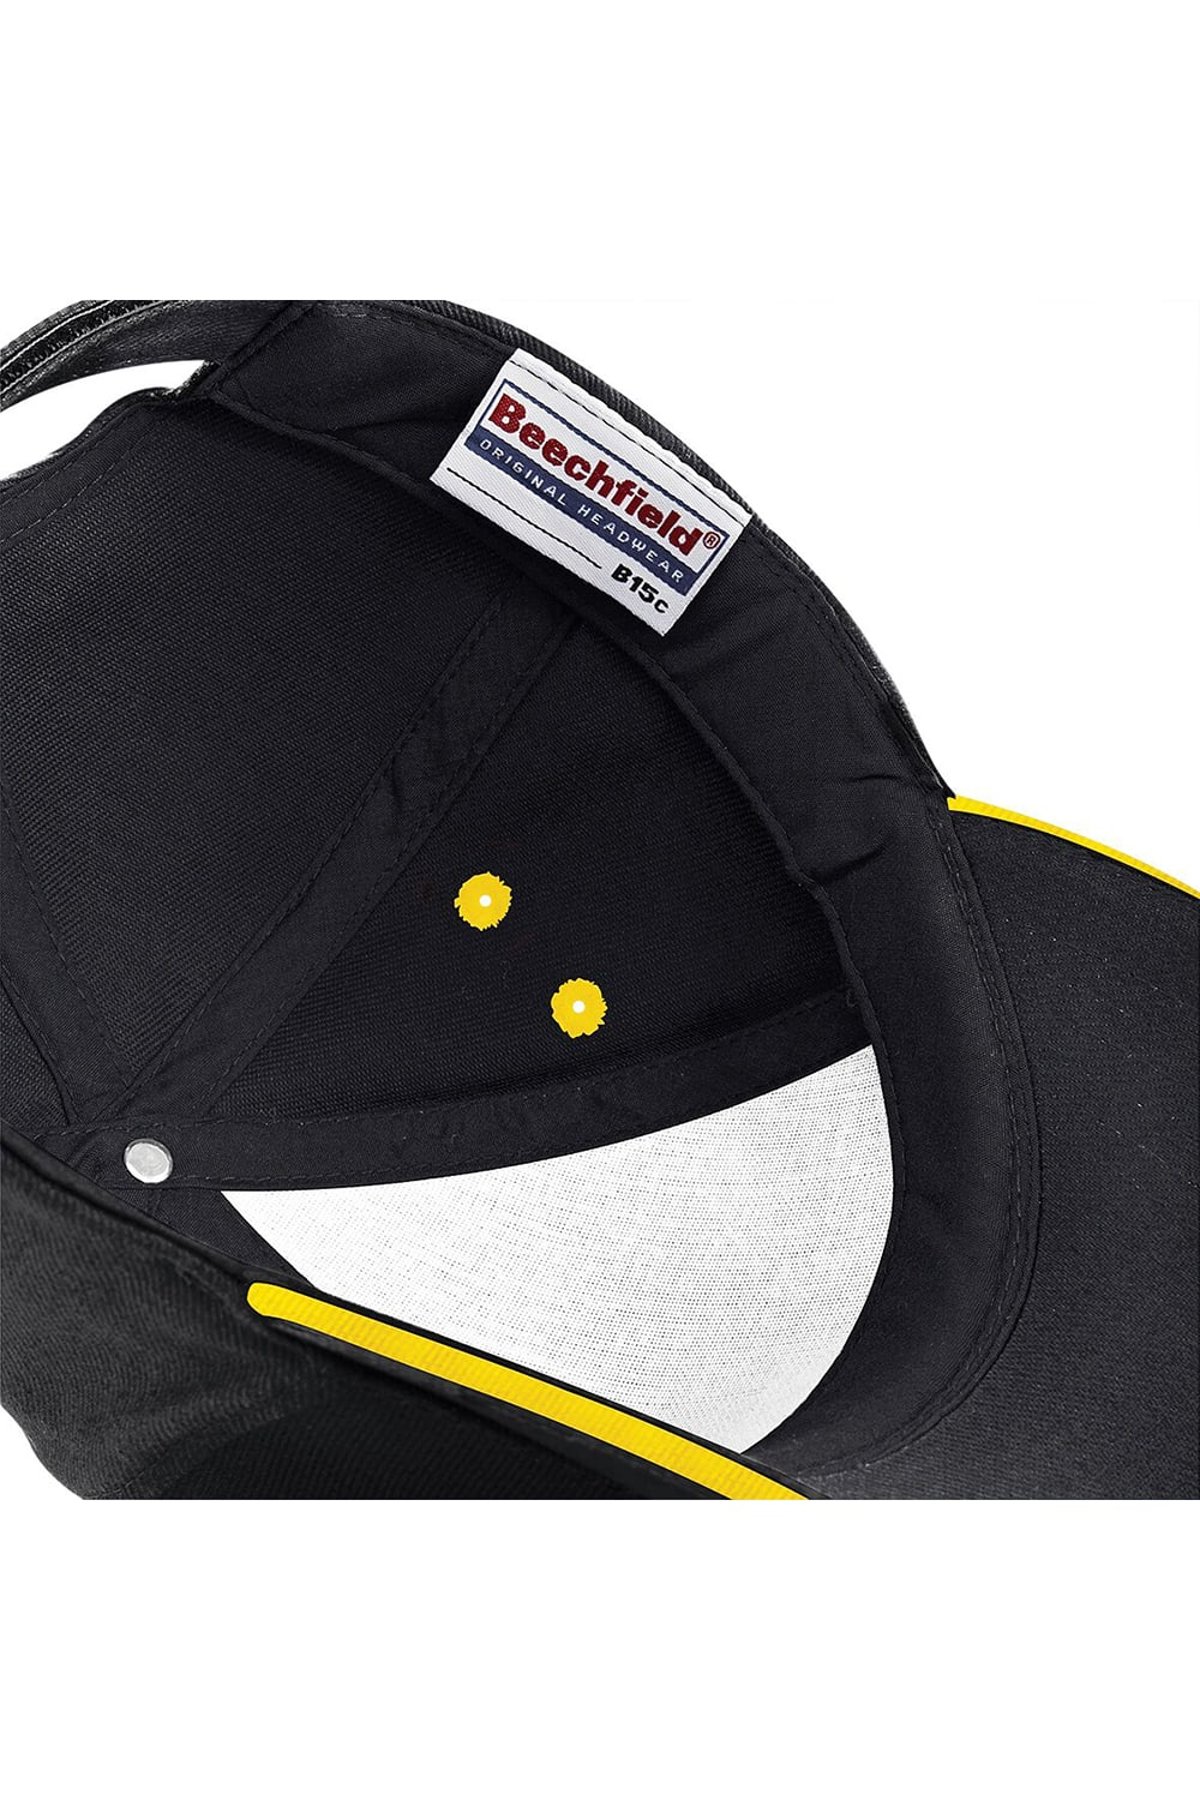 Beechfield B15C 5 Panel Contrast Baseball Cap With Sandwich Peak Black/Yellow 